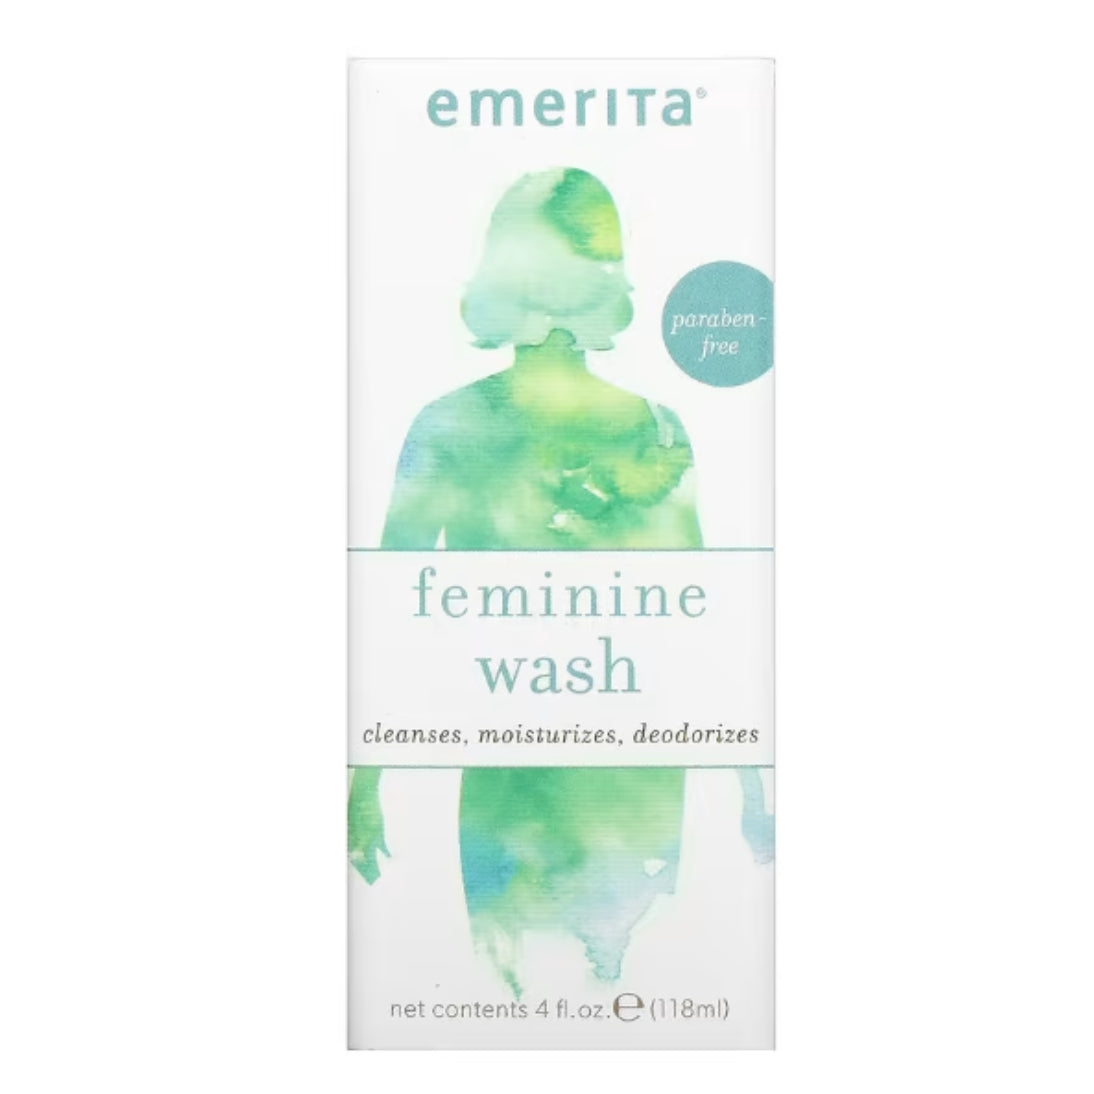 Femenine Wash Emerita